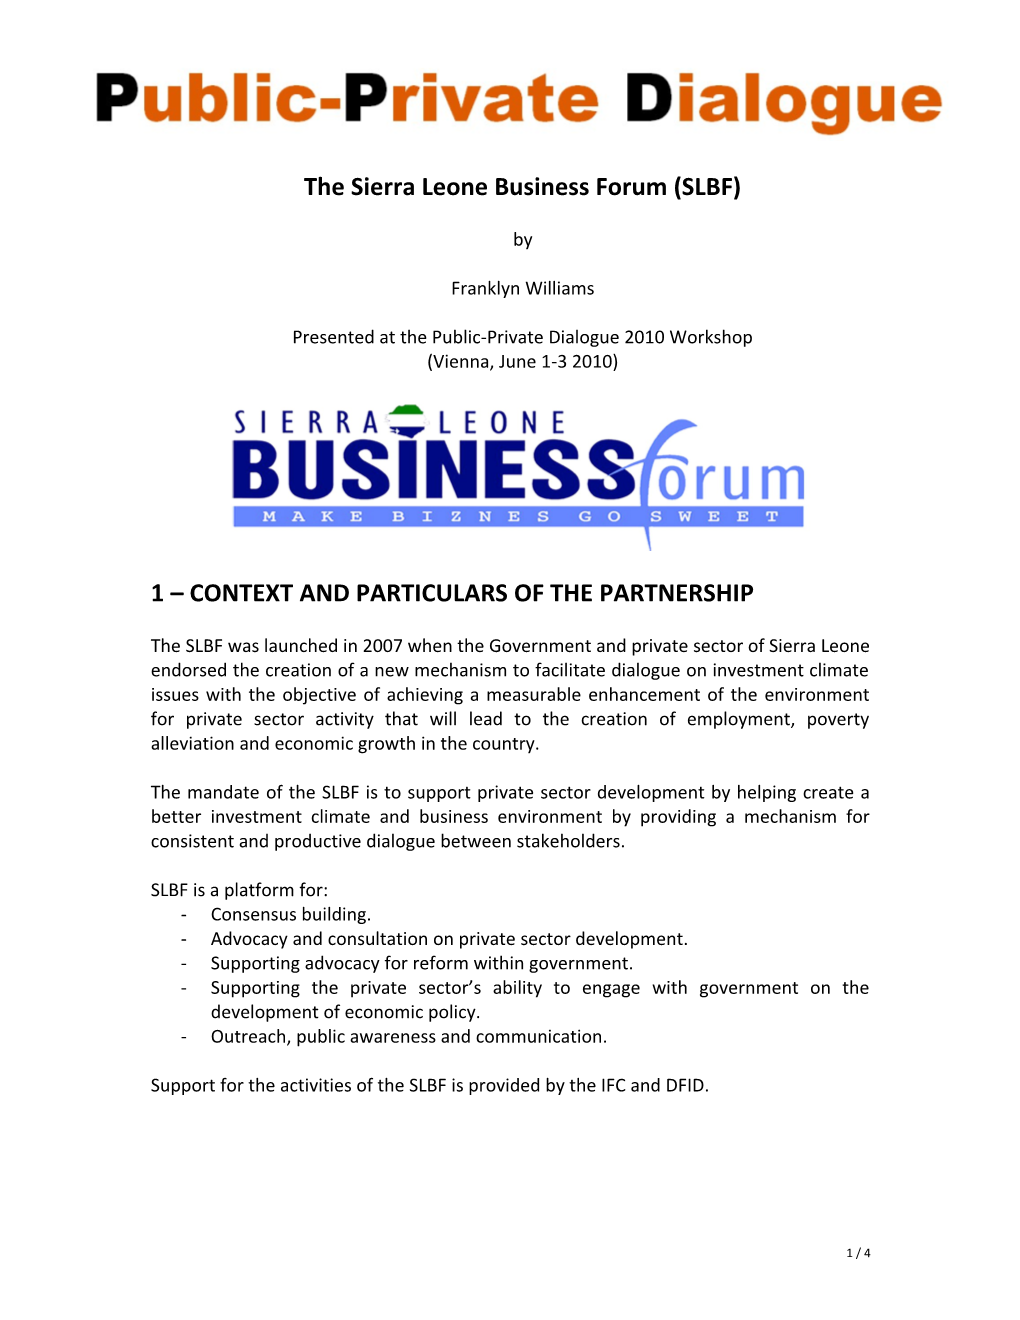 The Sierra Leone Business Forum (SLBF)